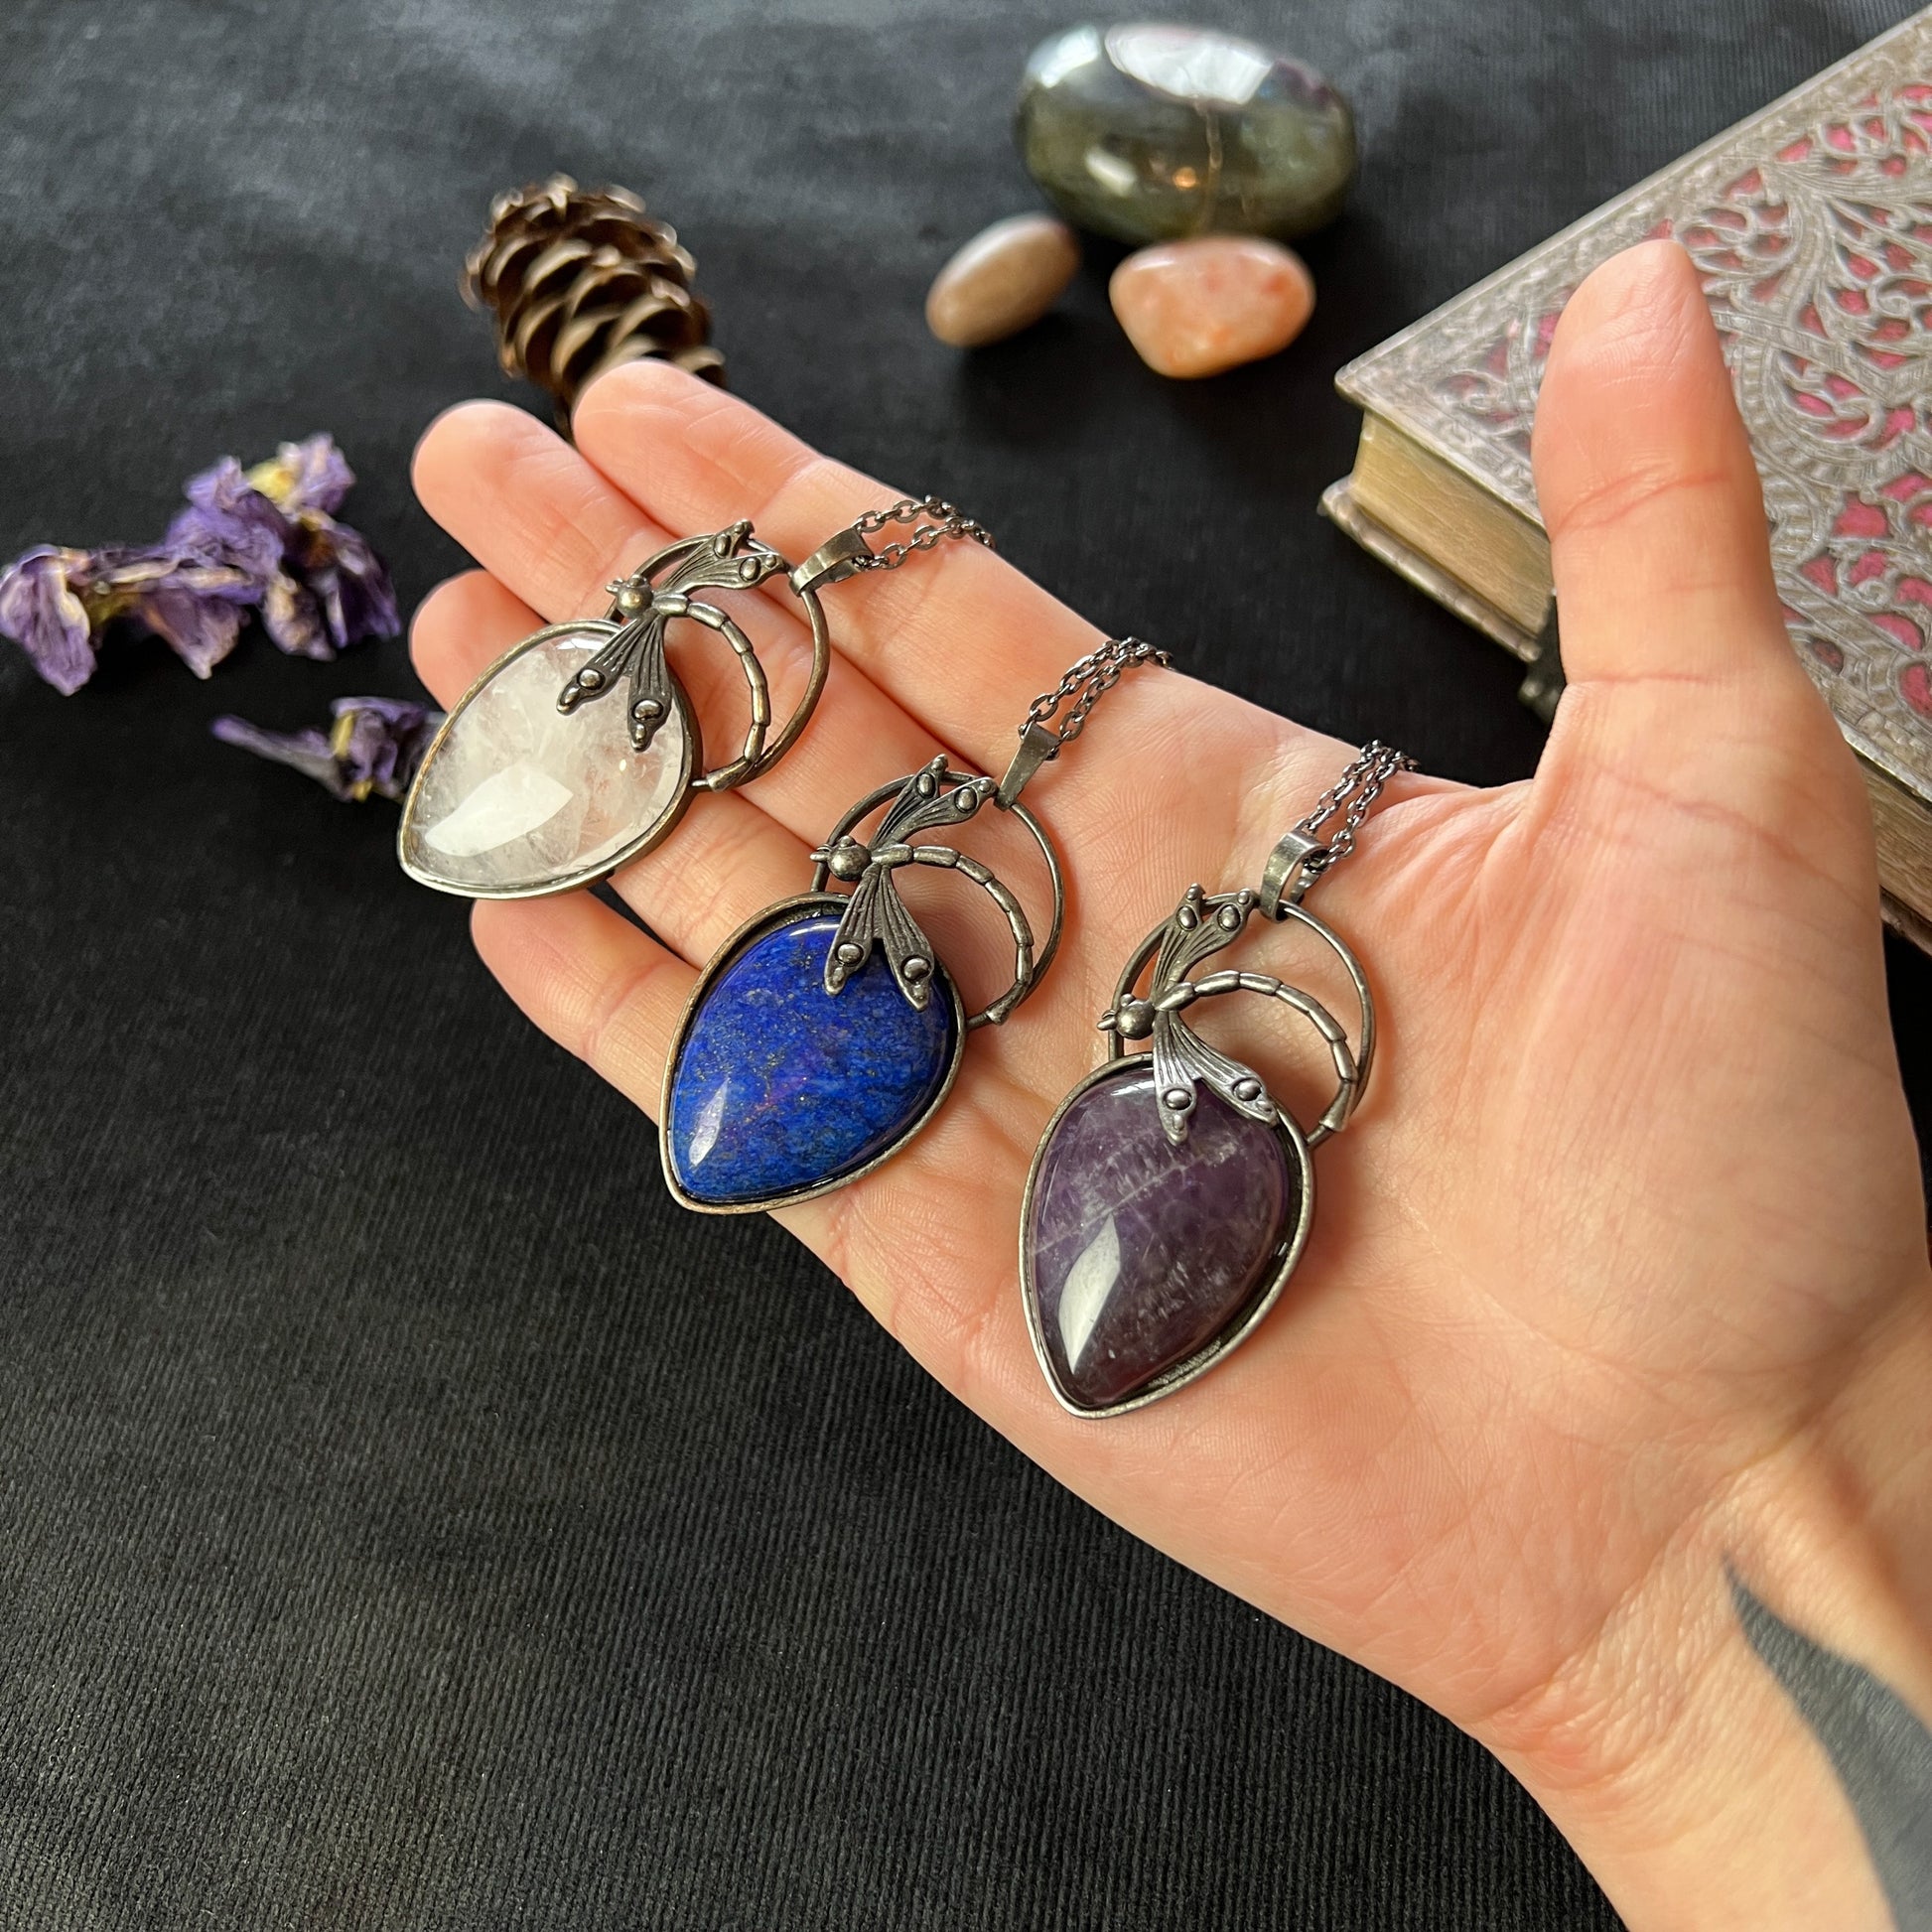 Dragonfly gemstone necklace quartz, lapis lazuli or amethyst pagan witch pendant fantasy fairy necklace crystal jewelry